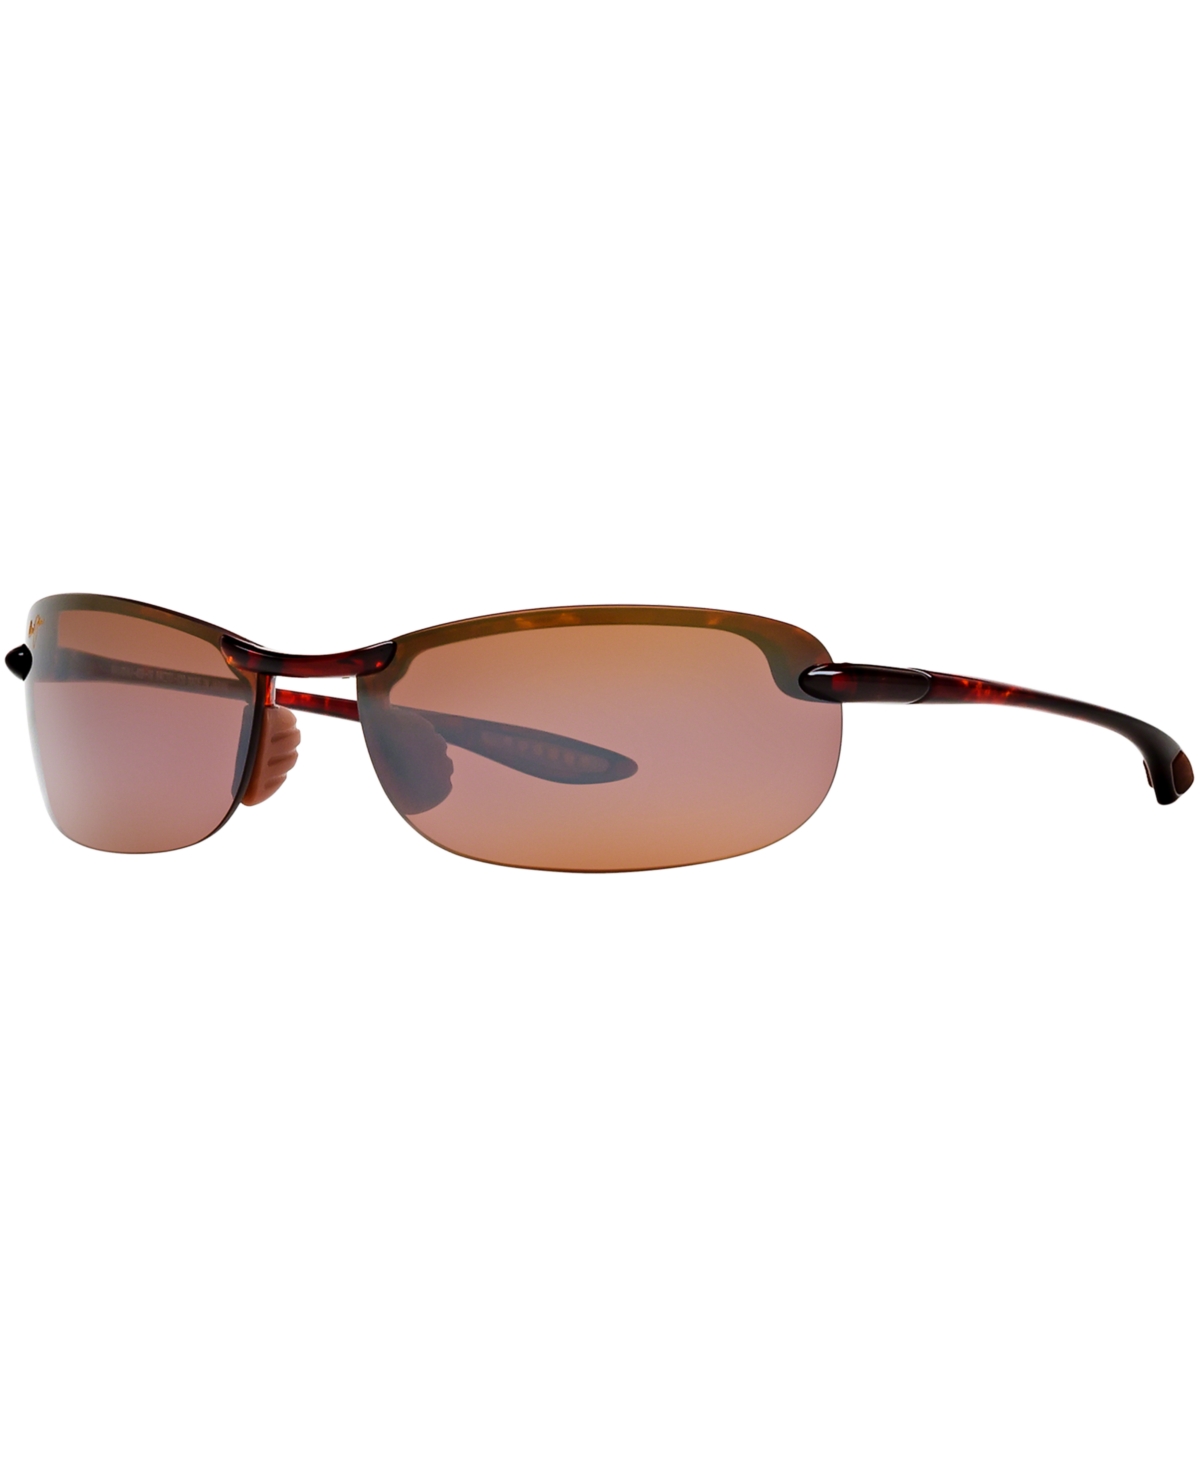 Makaha Polarized Sunglasses , 405 - Brown/Brown